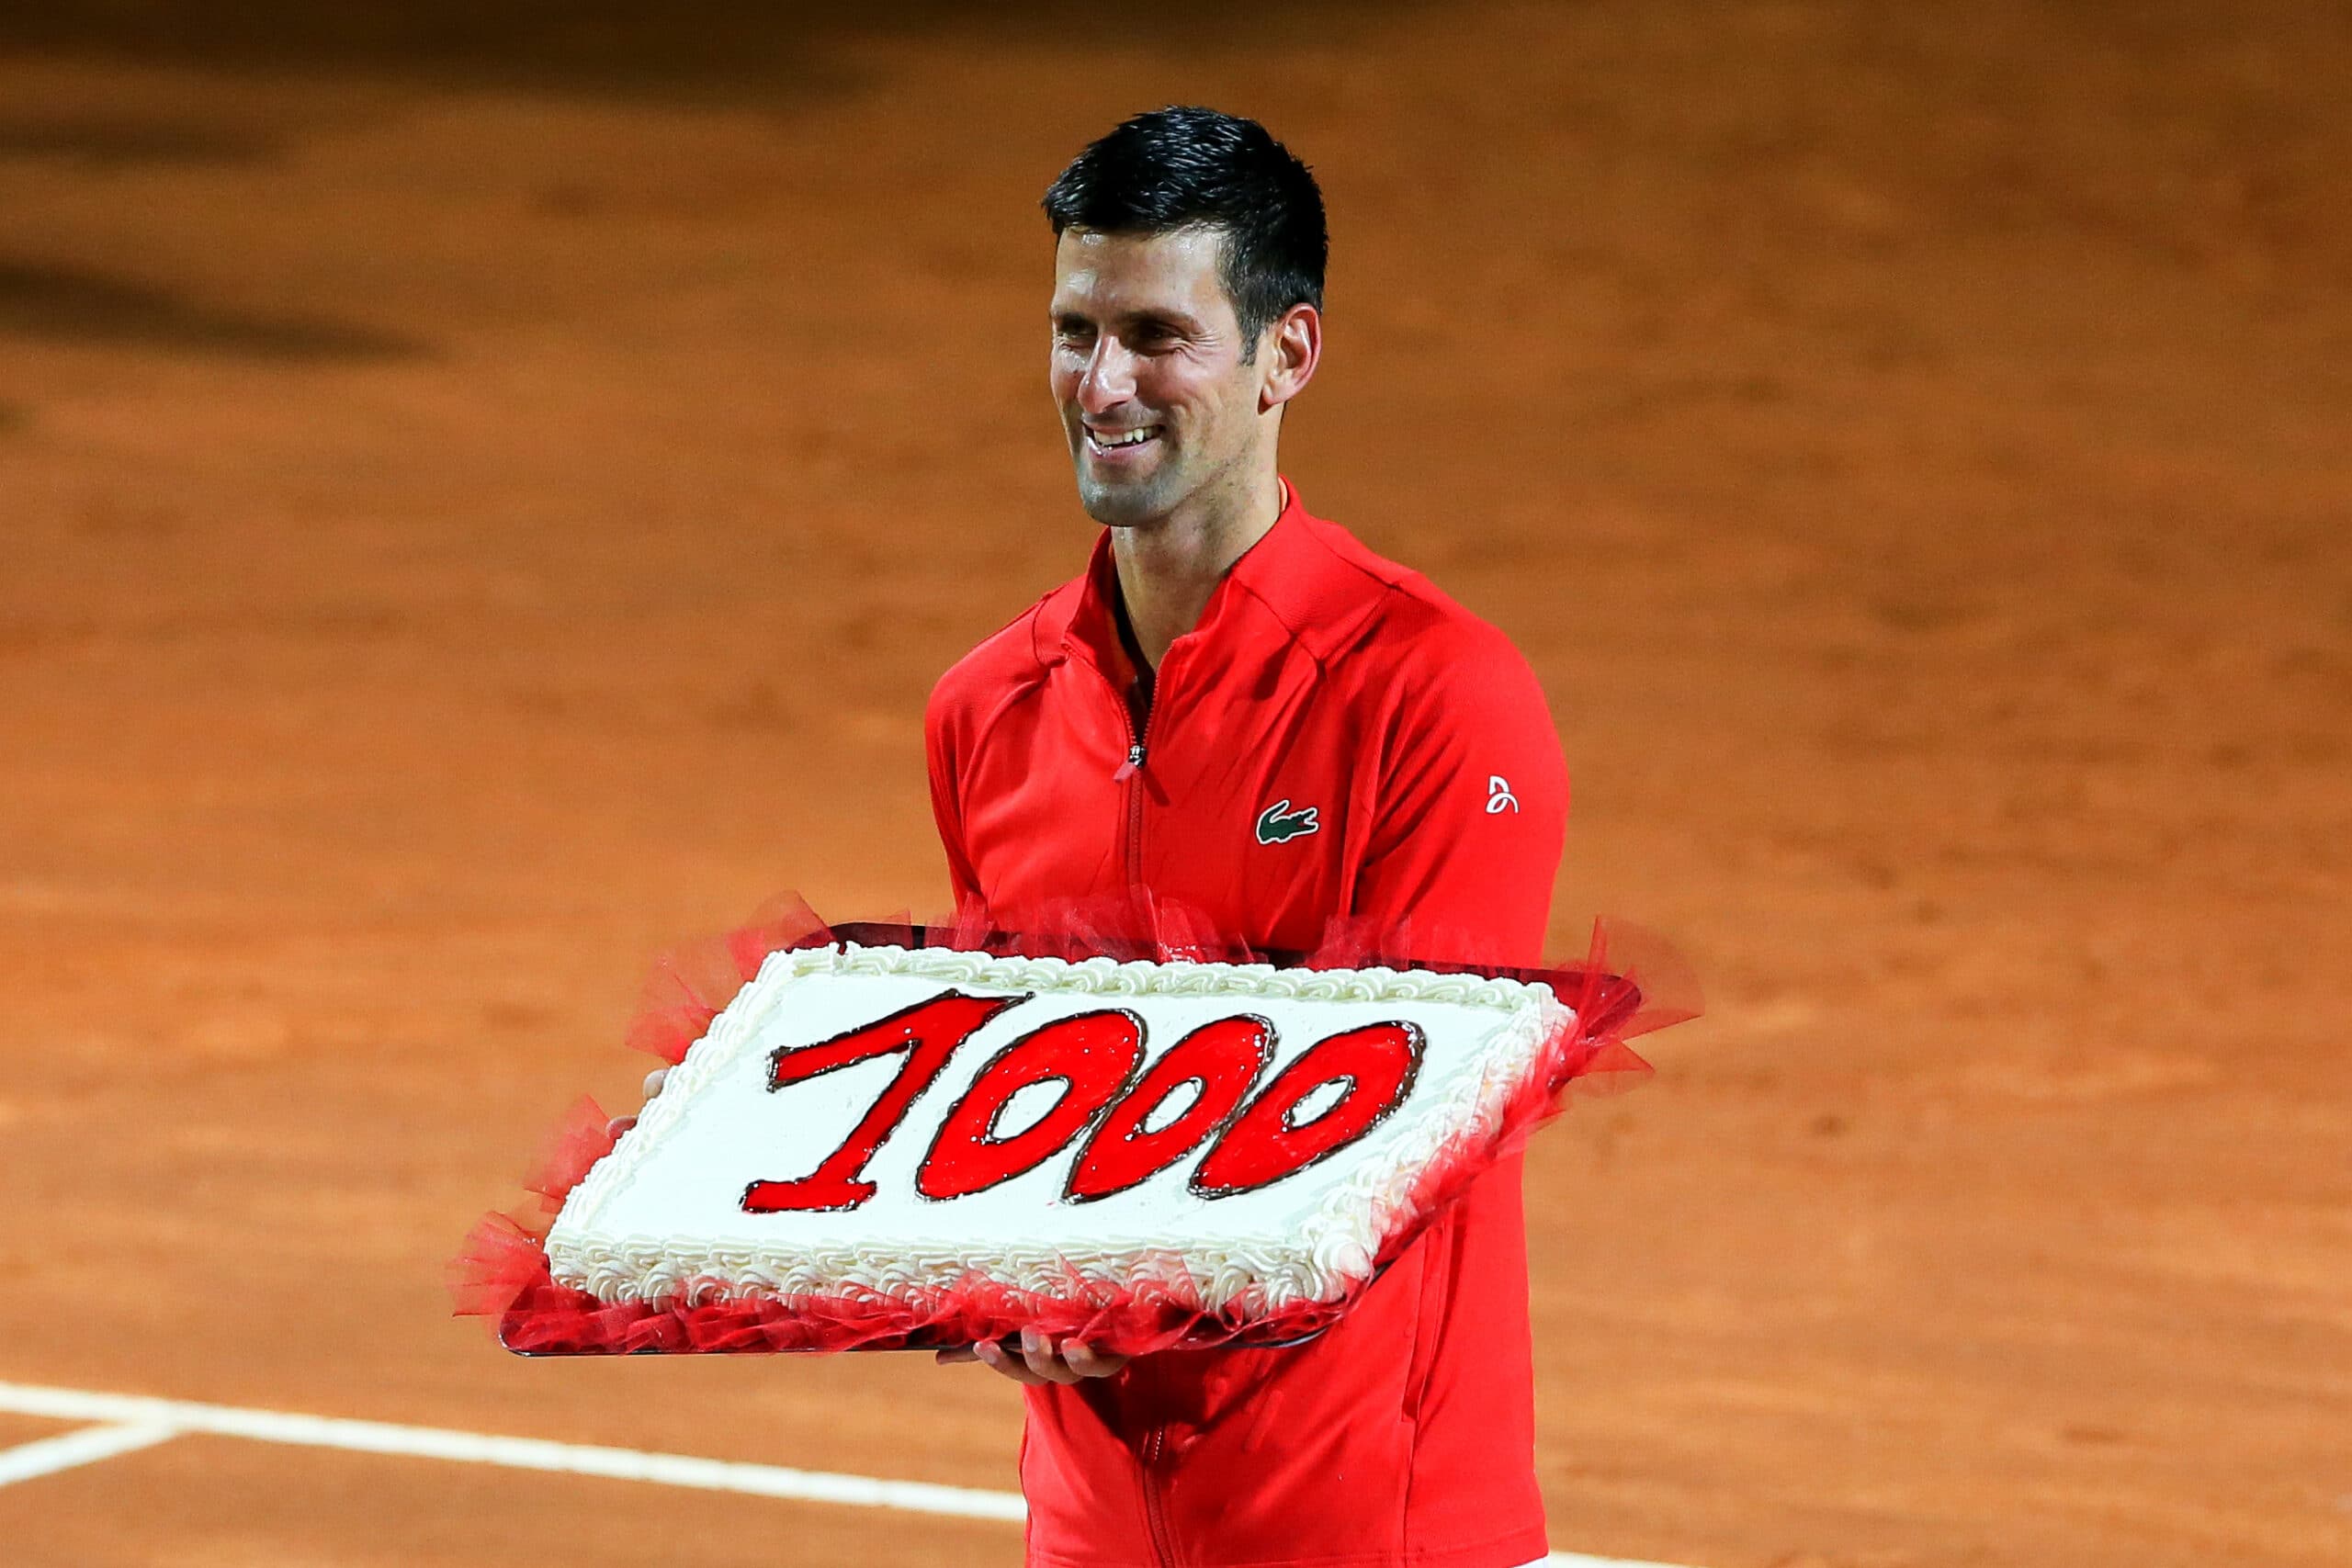 Italian Open Semifinals LIVE: Novak Djokovic gets his 1000th career victory, defeats Casper Ruud in straight sets to enter Italian Open final